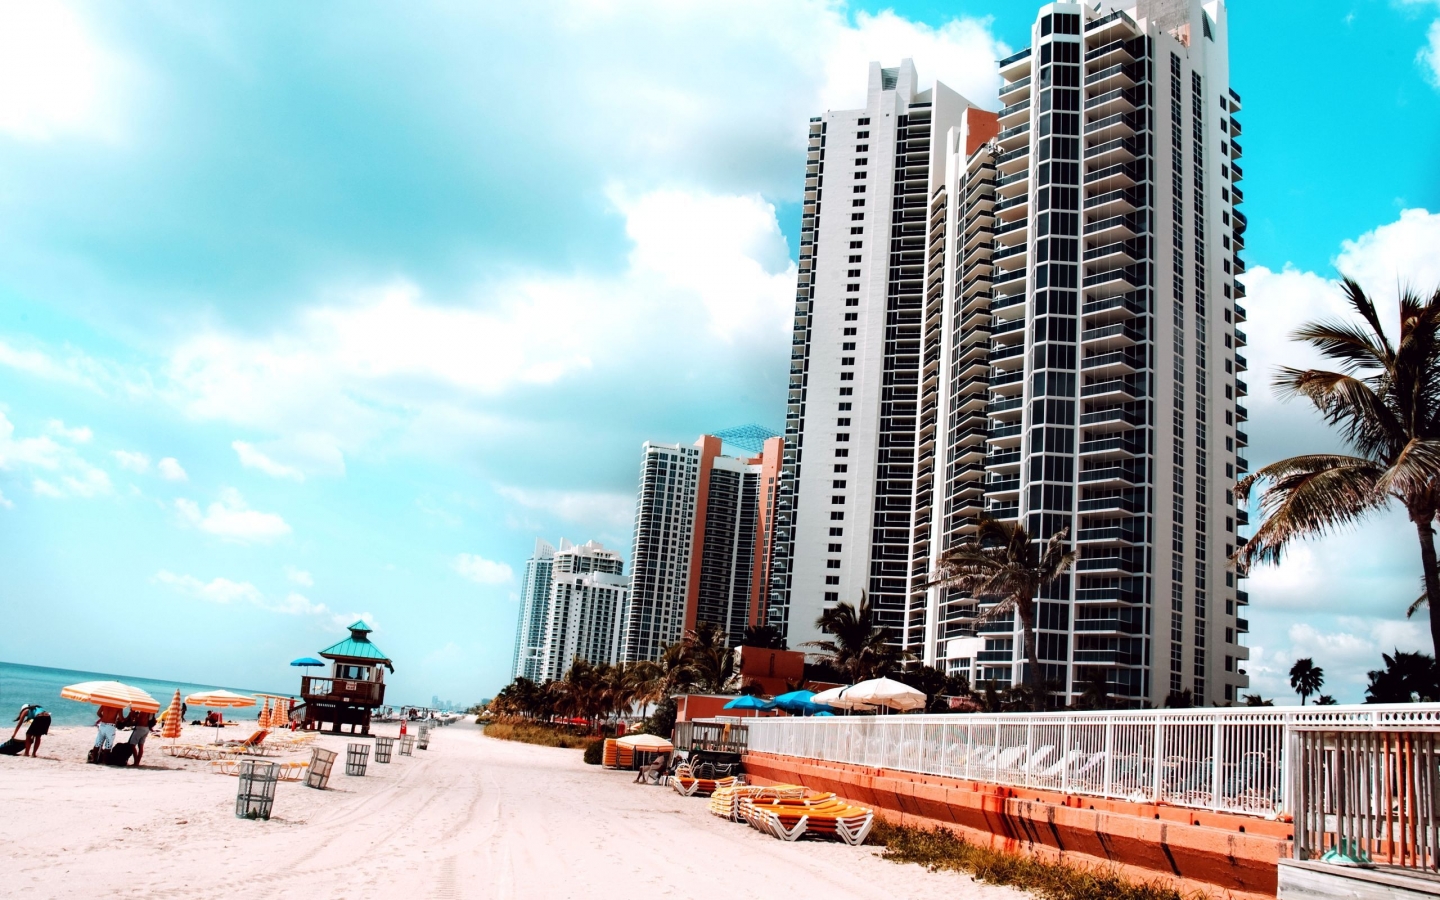 Miami for 1440 x 900 widescreen resolution